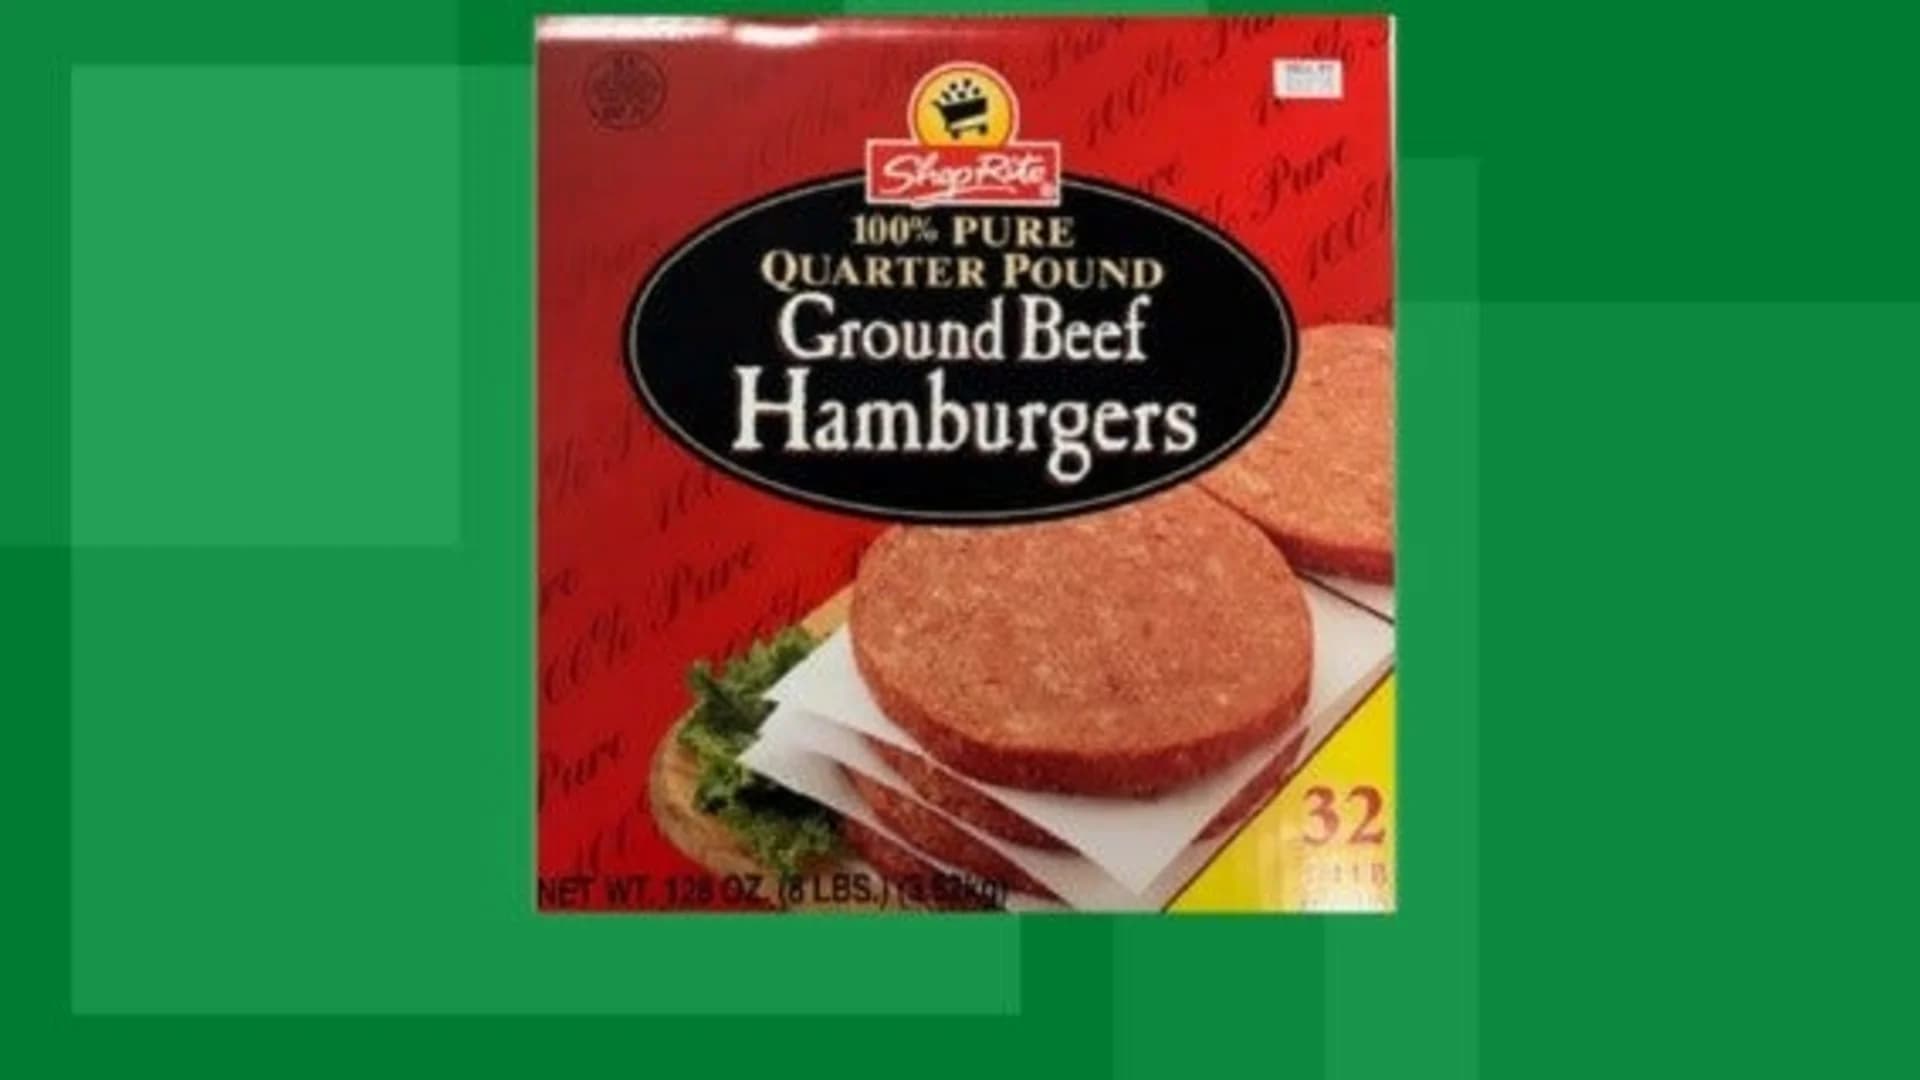 Check your freezer: ShopRite burgers recalled over potential E. coli contamination